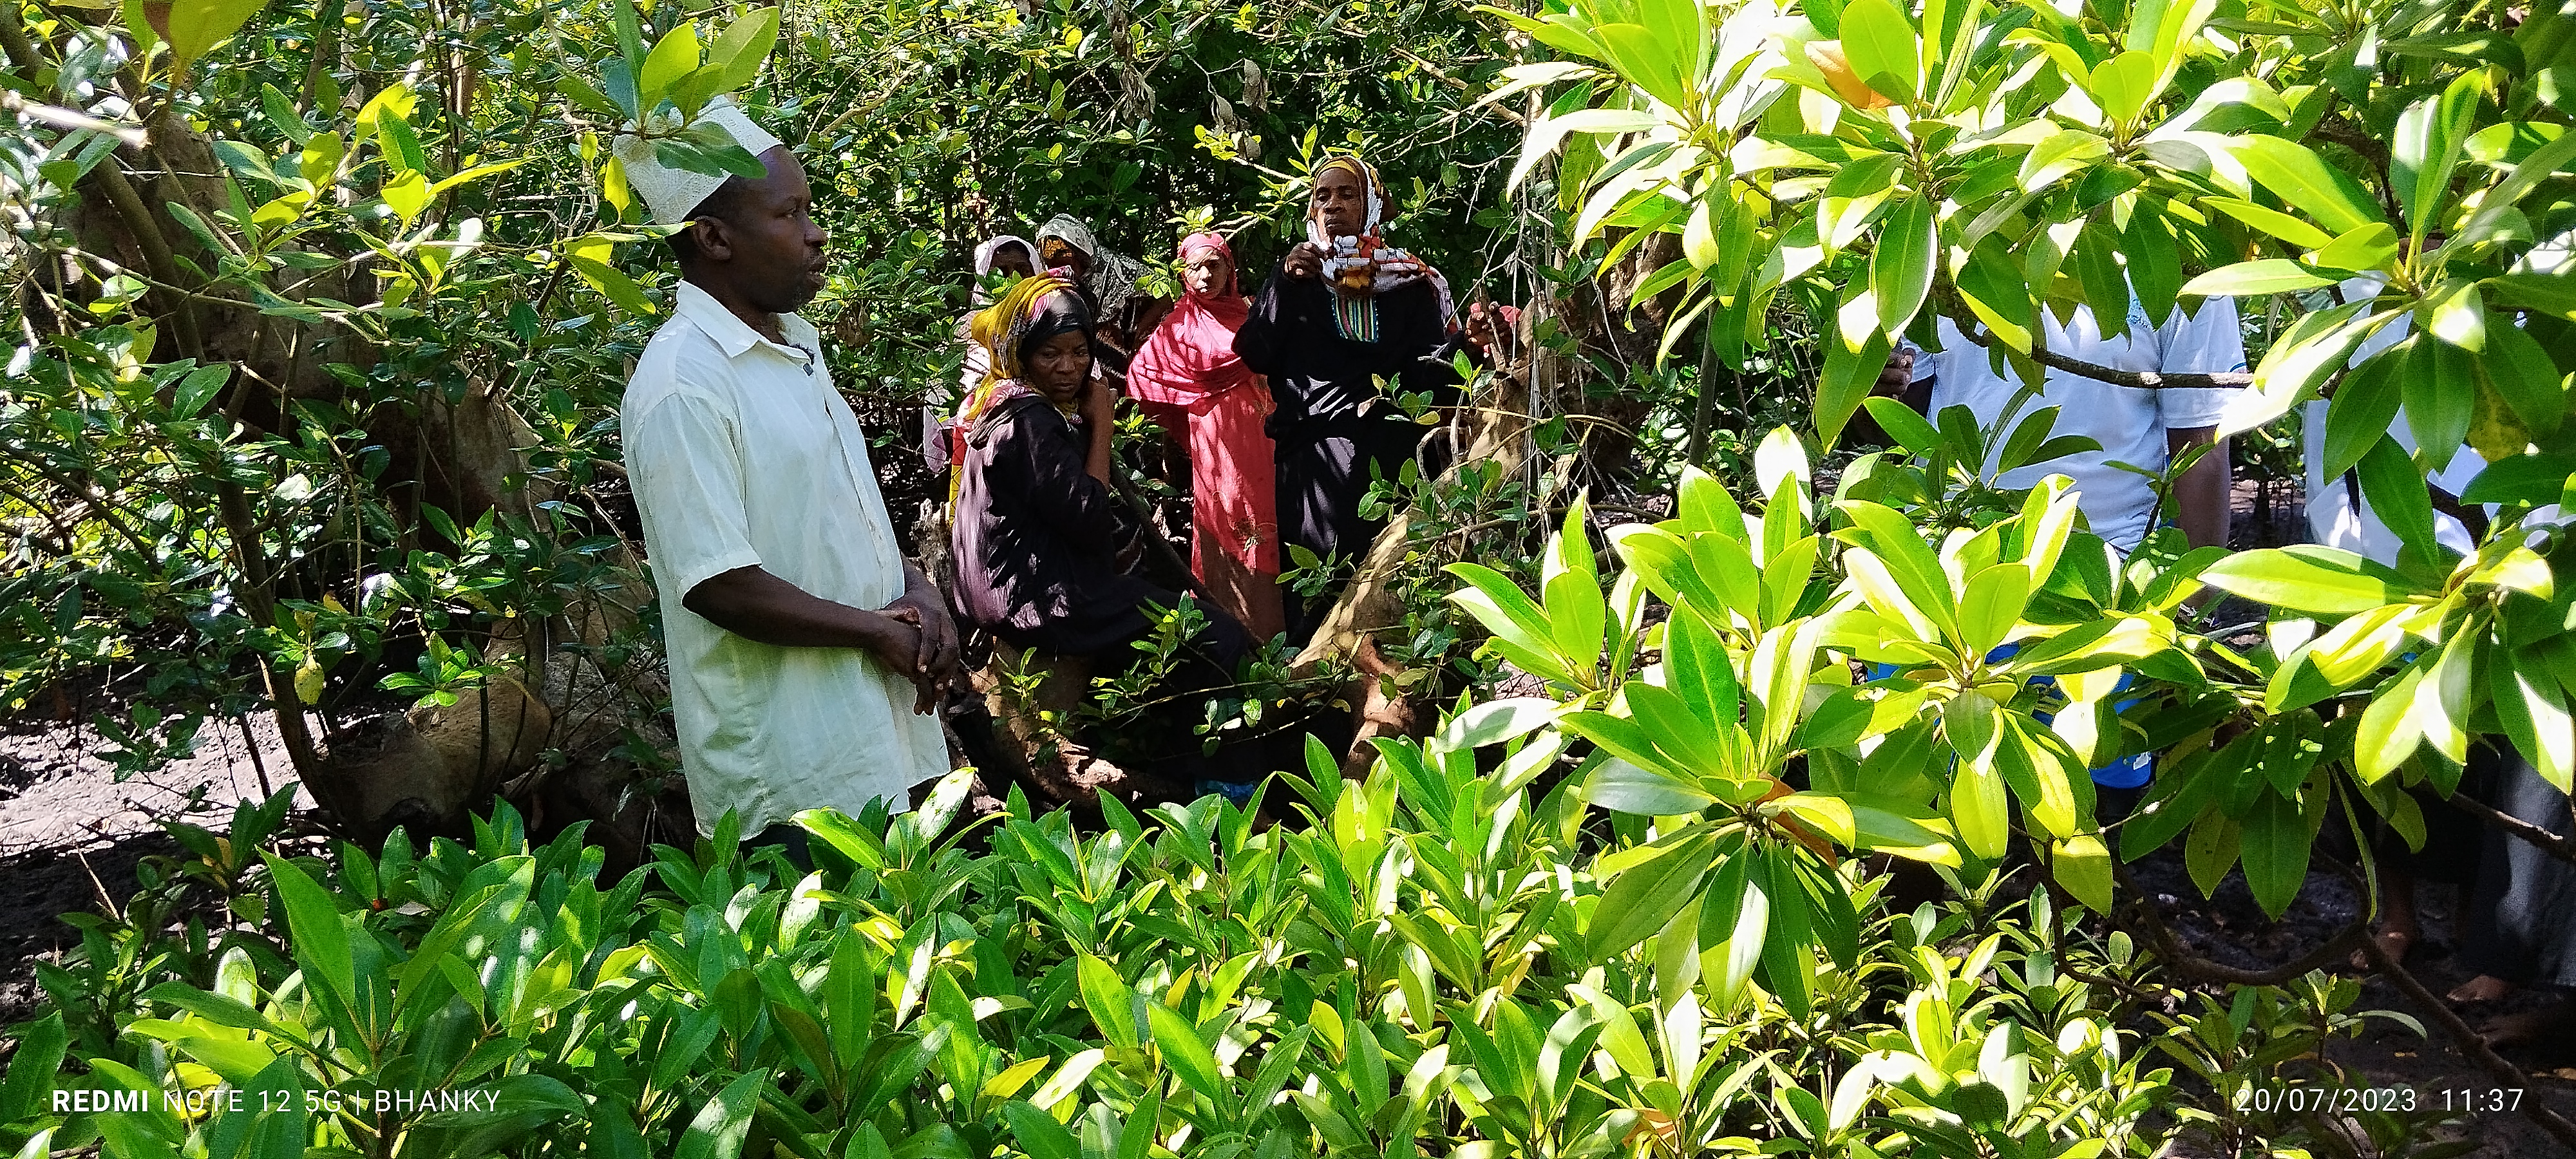 Zanzibar's coastal sustainability: a mangrove restoration initiative